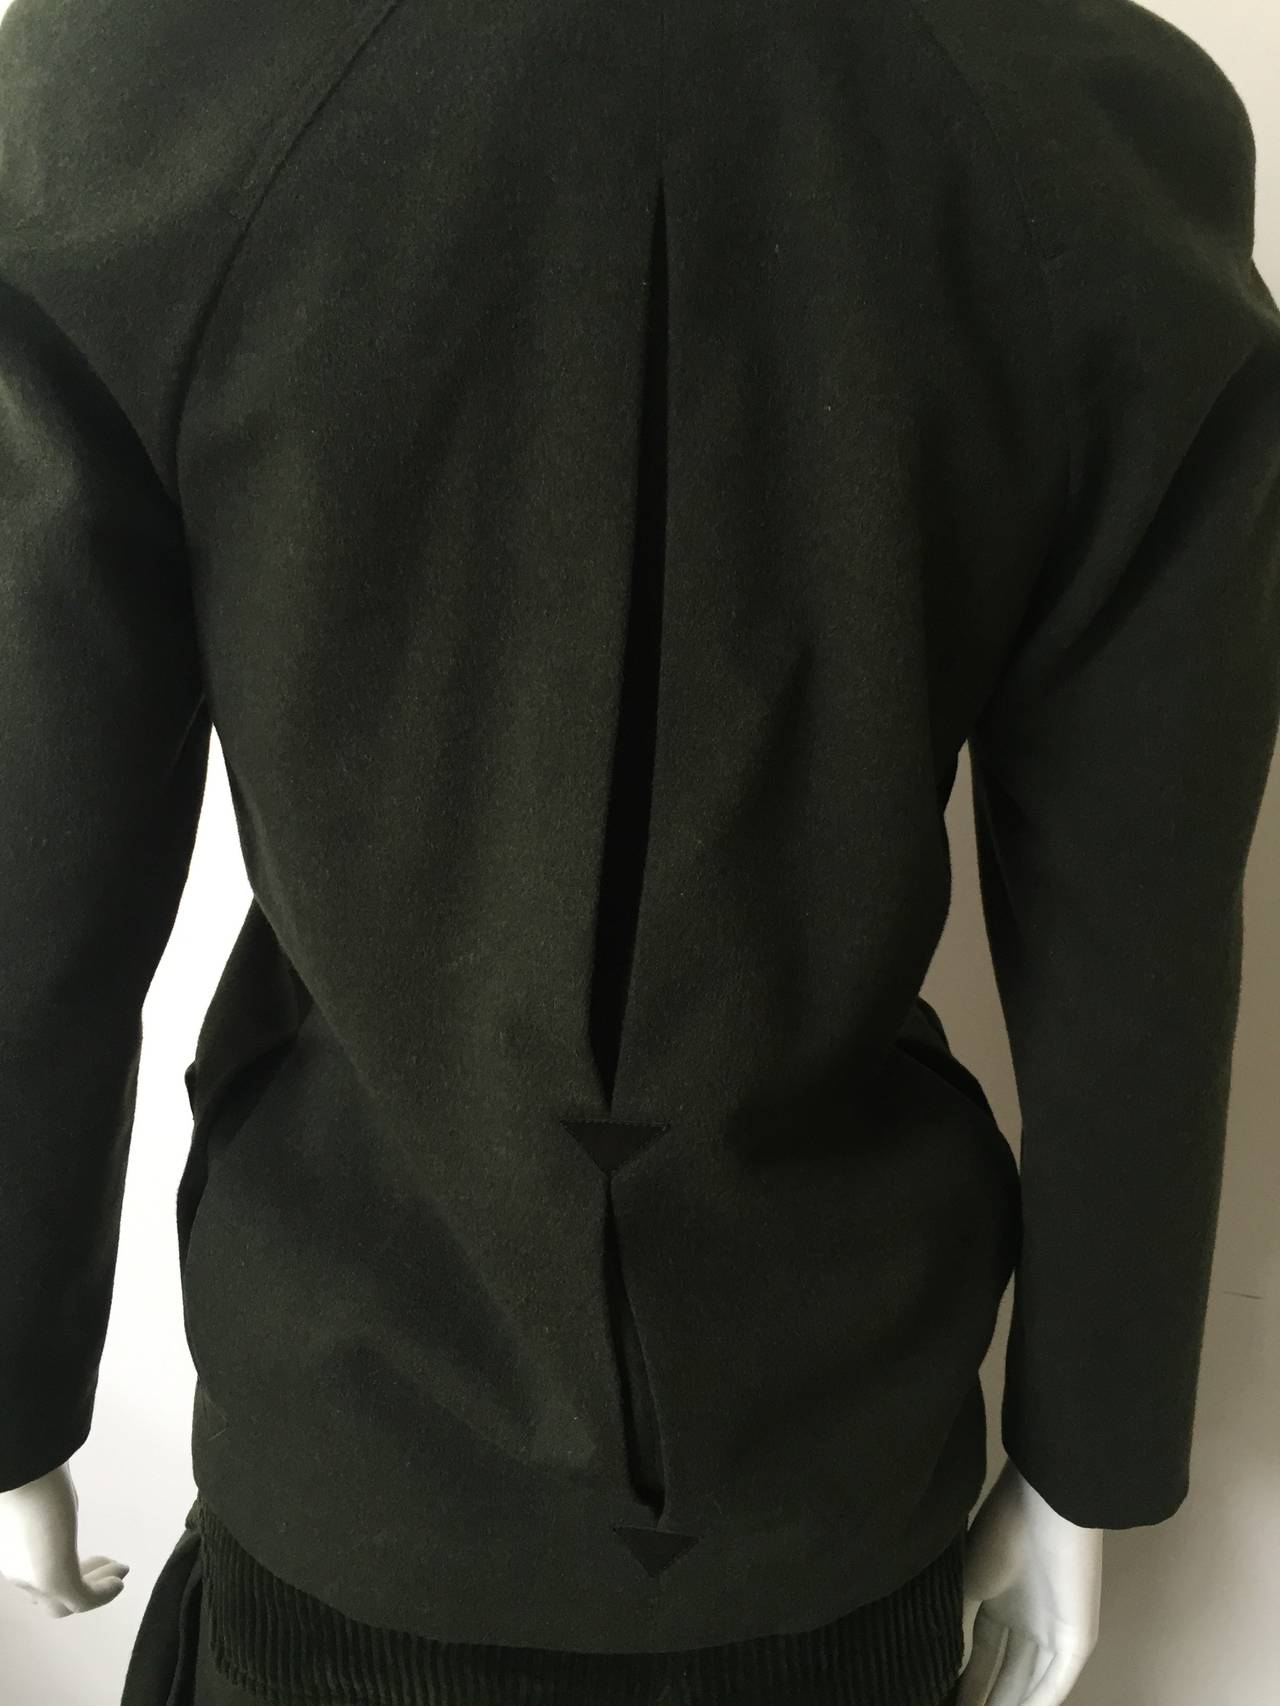 Gianni Versace 80s green wool jacket & gauchos size 4 / 38. 4